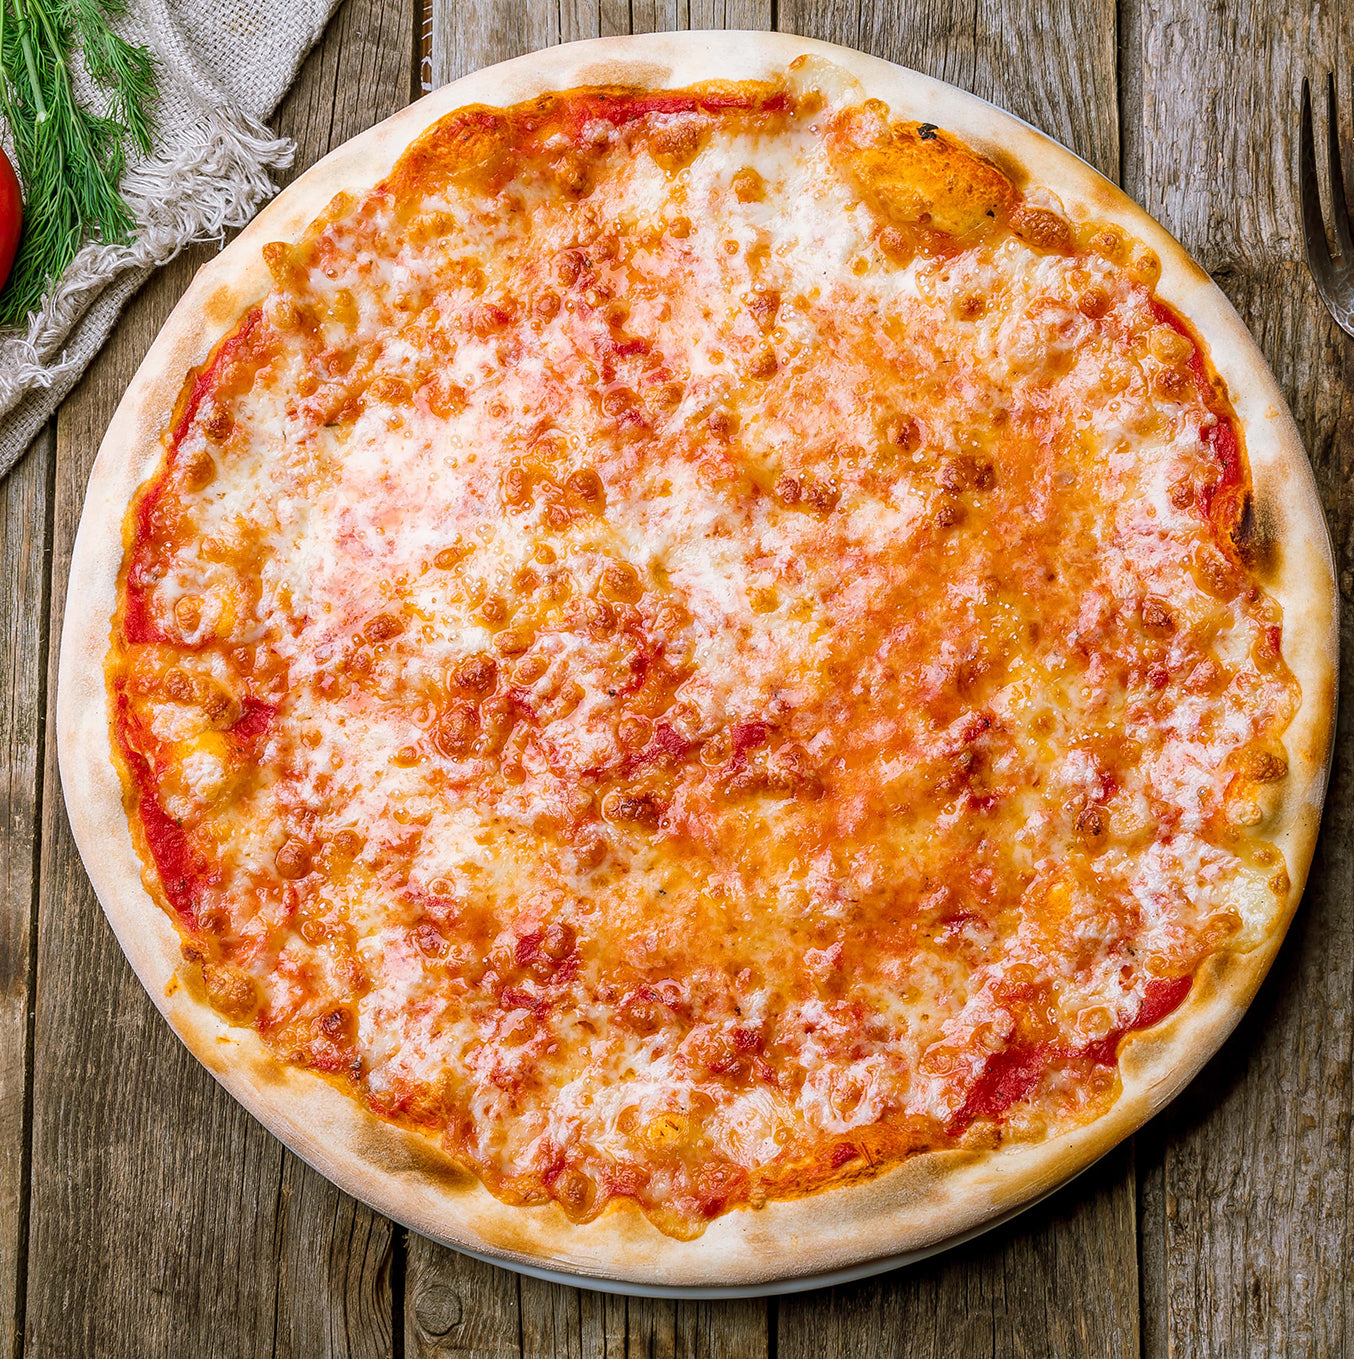 ”Pizza”